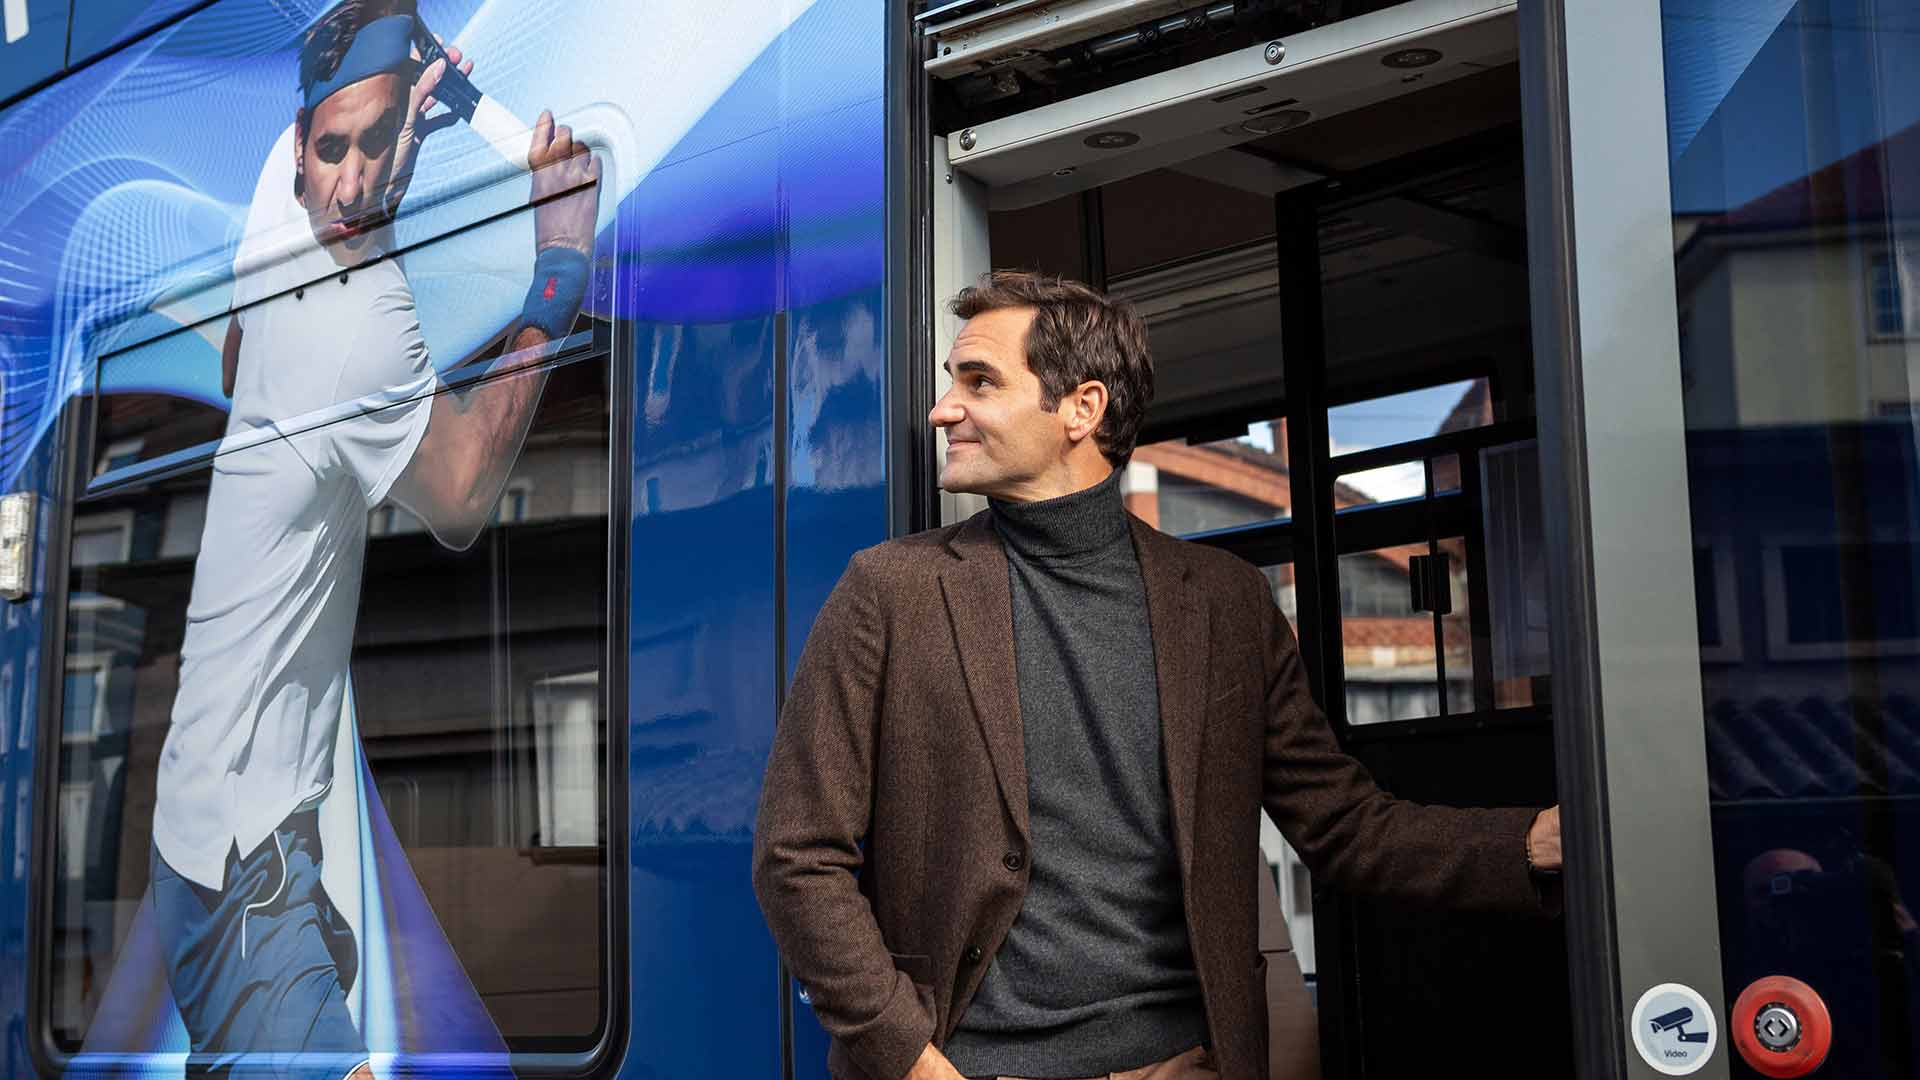 Roger Federer inaugurates the 'Federer Express' tram in Basel. Credit: Basler Verkehrs-Betriebe/Bettina Matthiessen